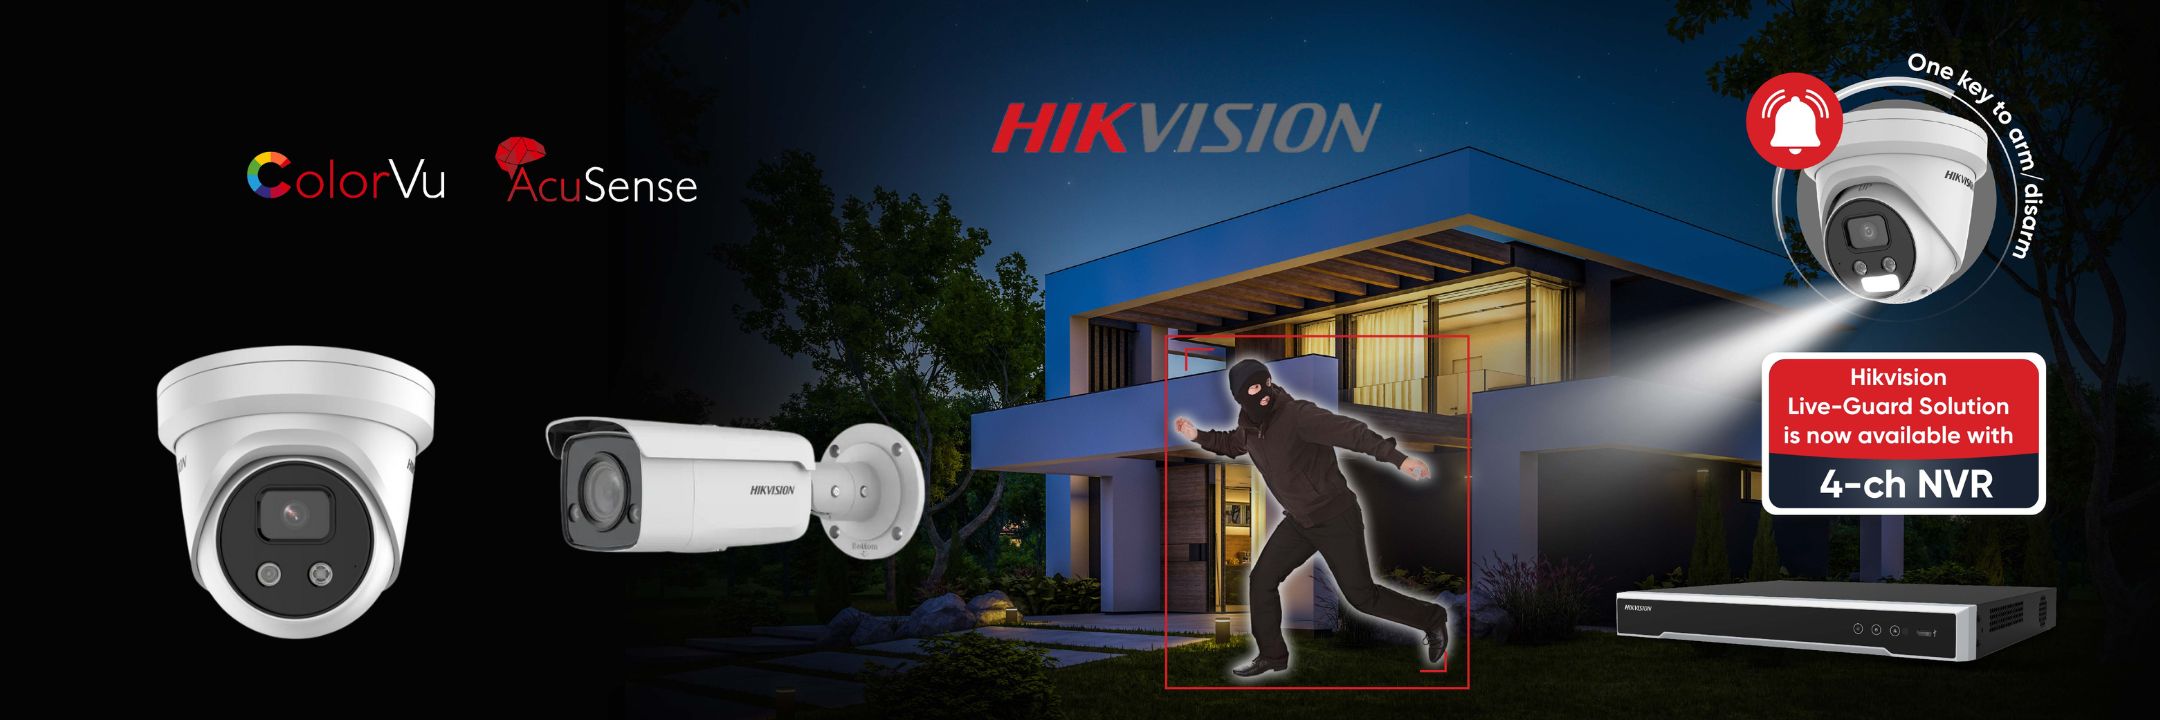 Hikvision Surveillance Cameras